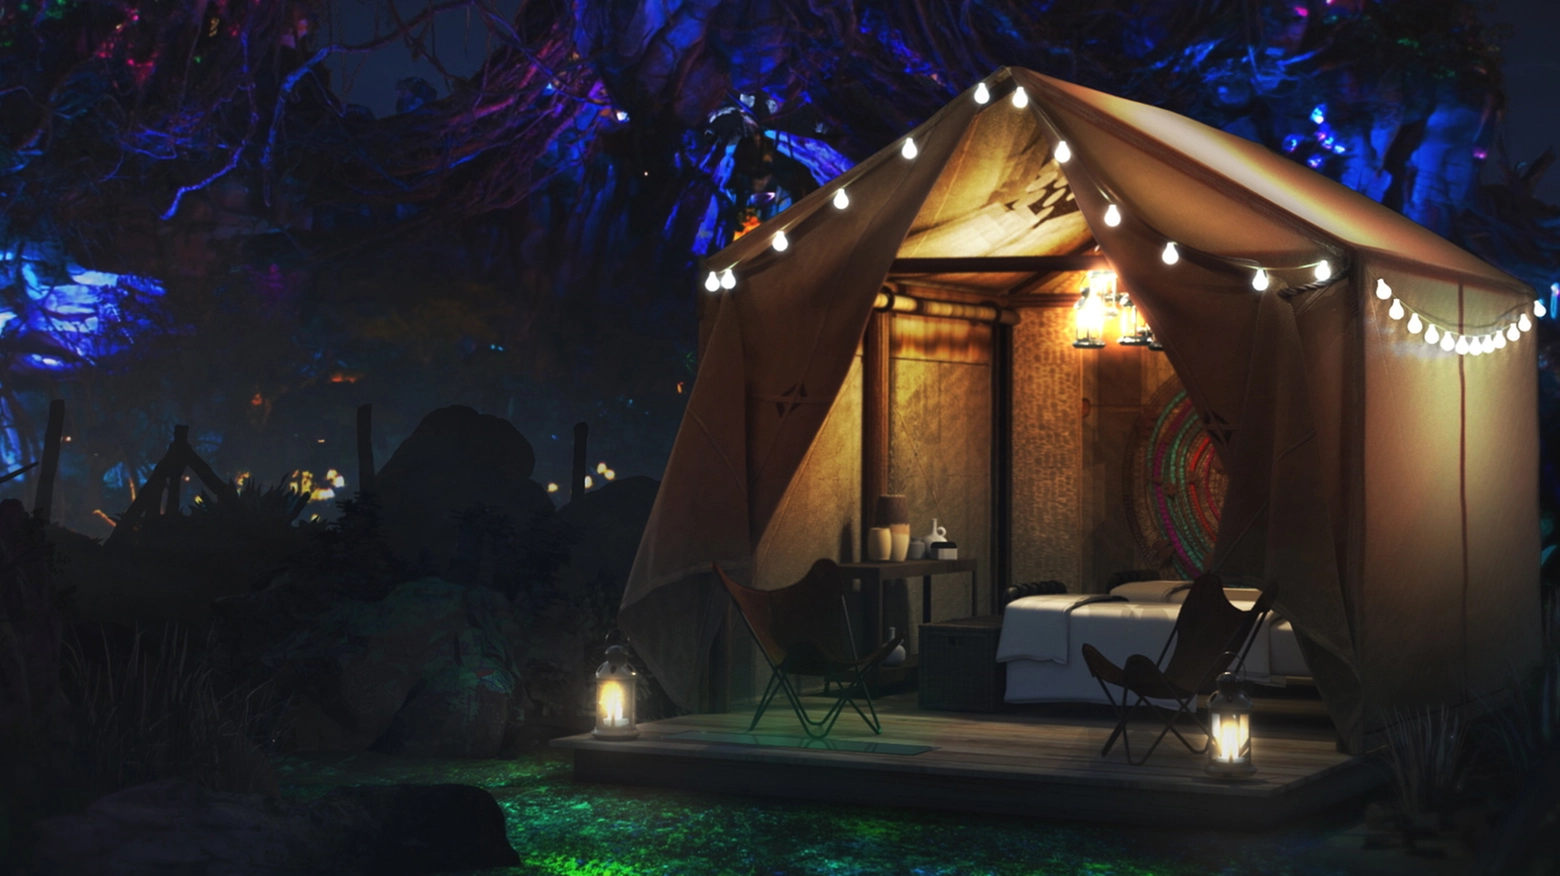 Una notte in tenda sul pianeta Pandora - Foto: Walt Disney World / parks.disney.com